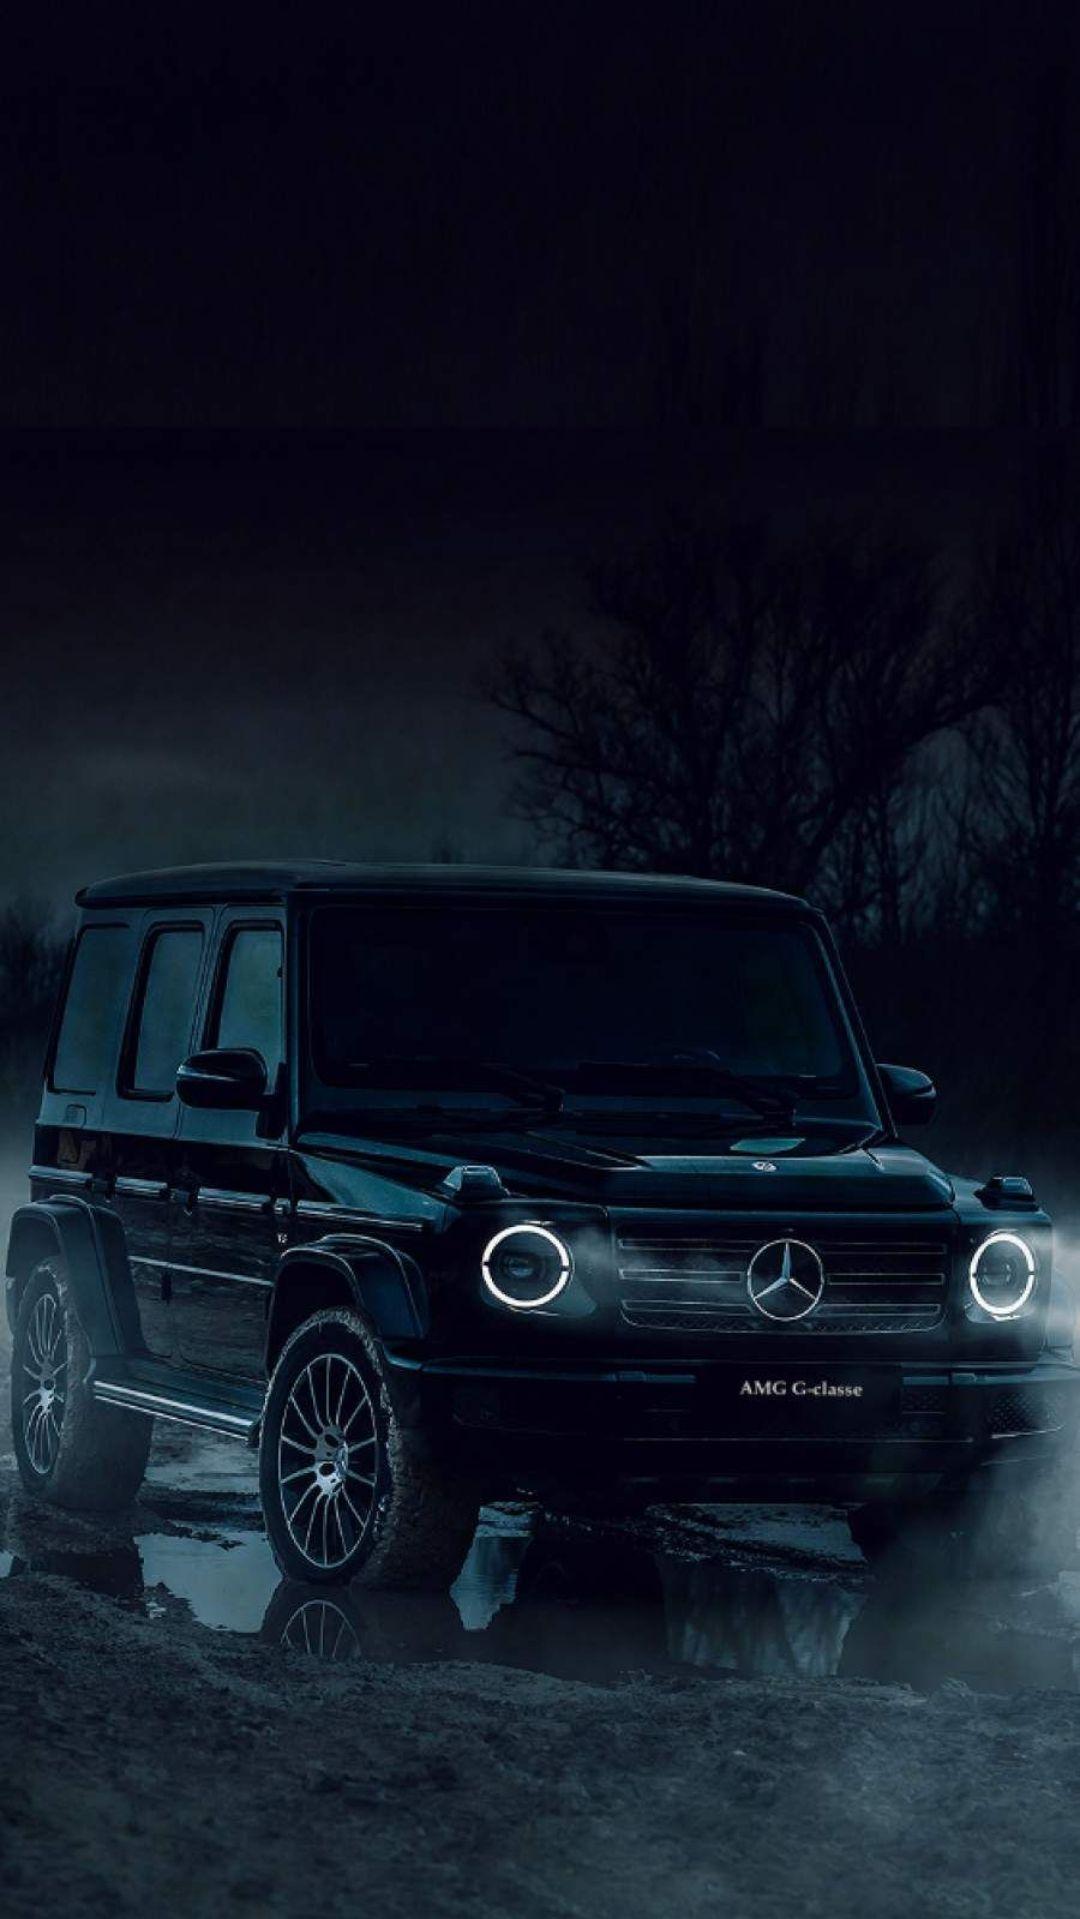 Free download Mercedes Benz G Class Wallpapers Top 35 Best Mercedes ...